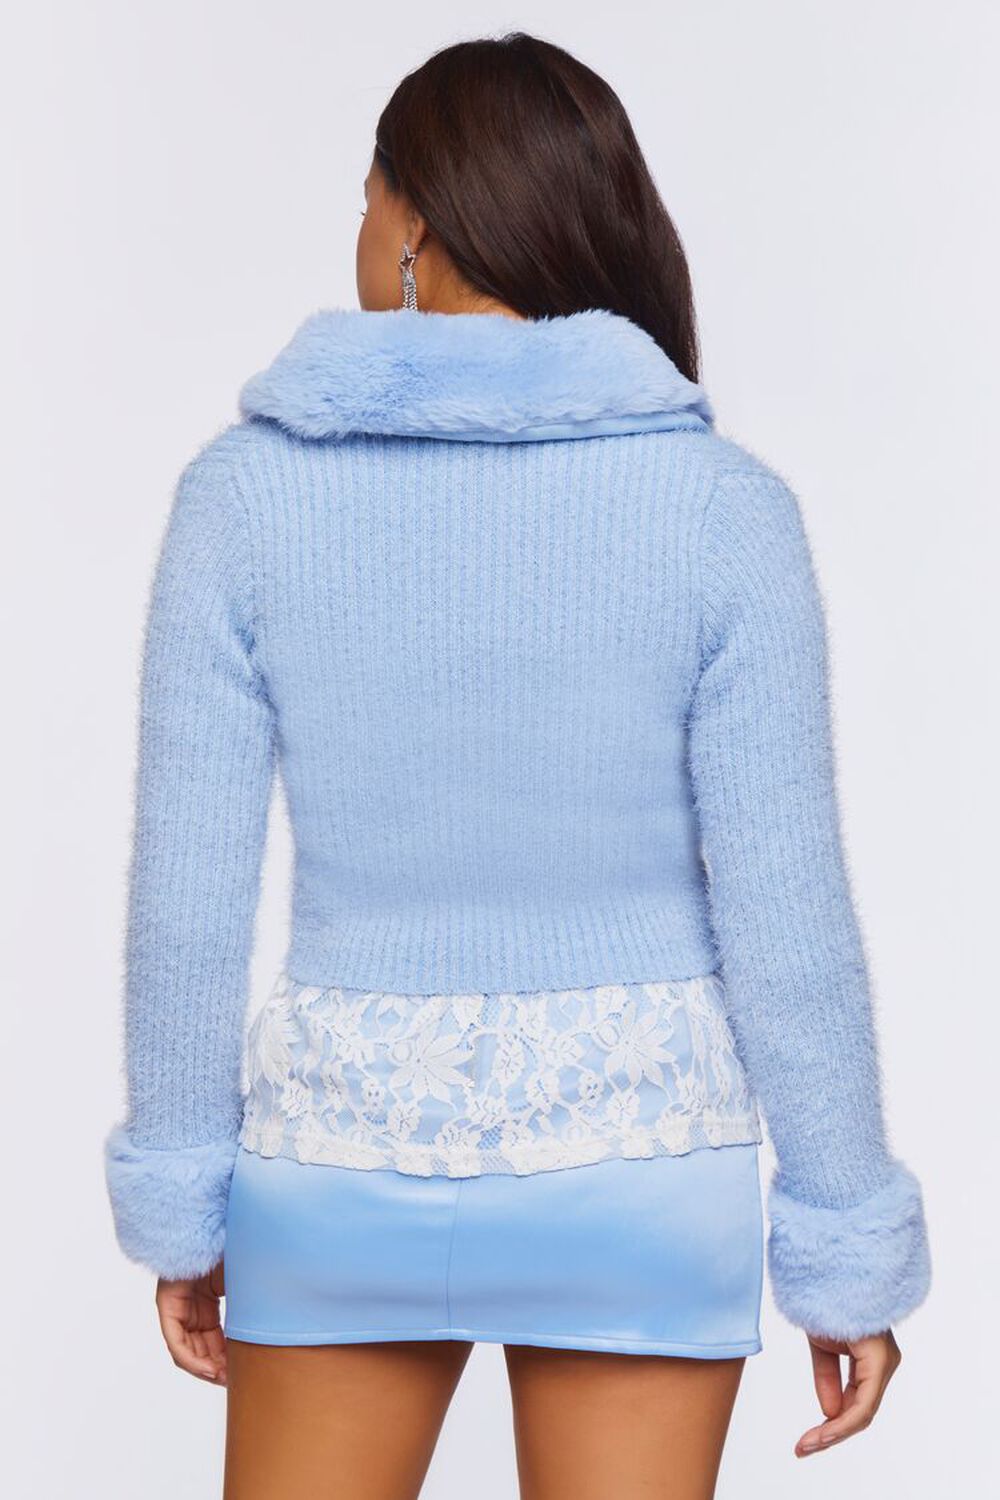 BABY BLUE Faux Fur-Trim Cardigan Sweater, image 3